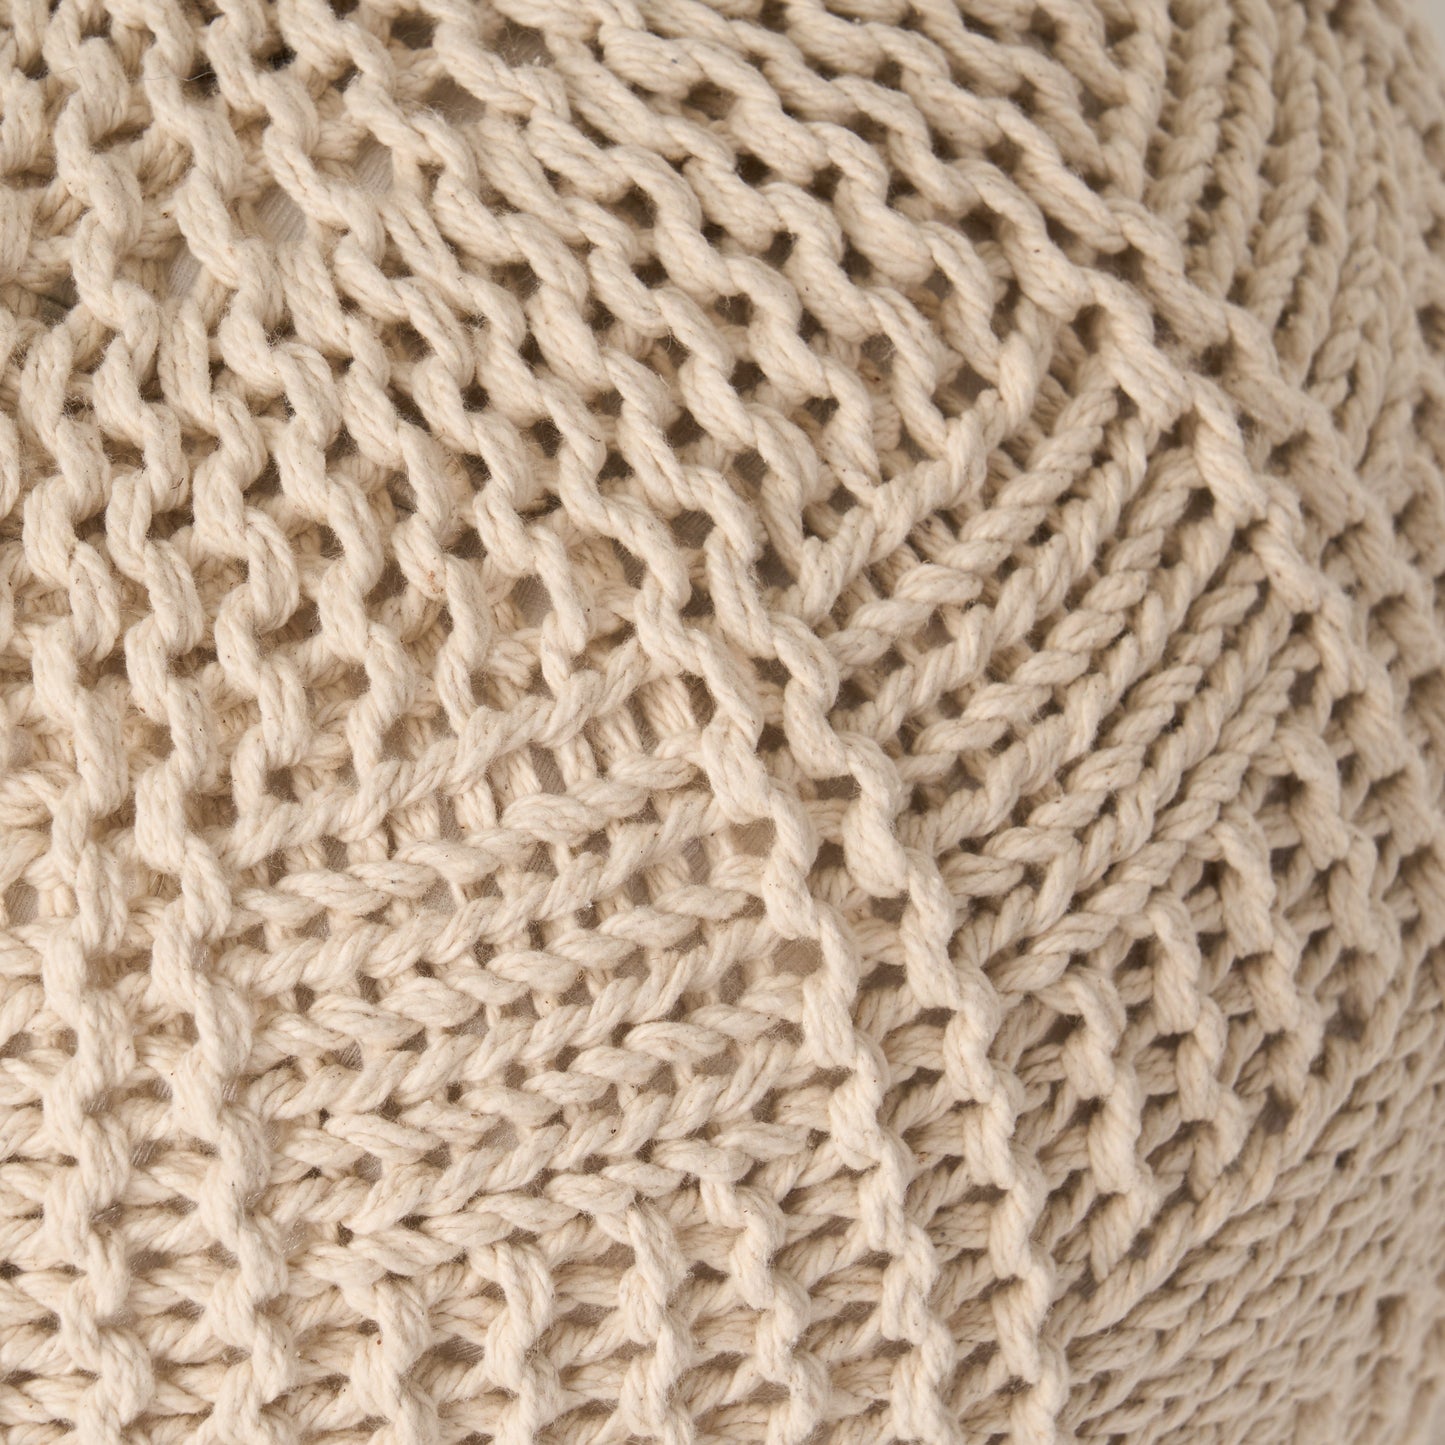 Sardis Modern Knitted Cotton Round Pouf